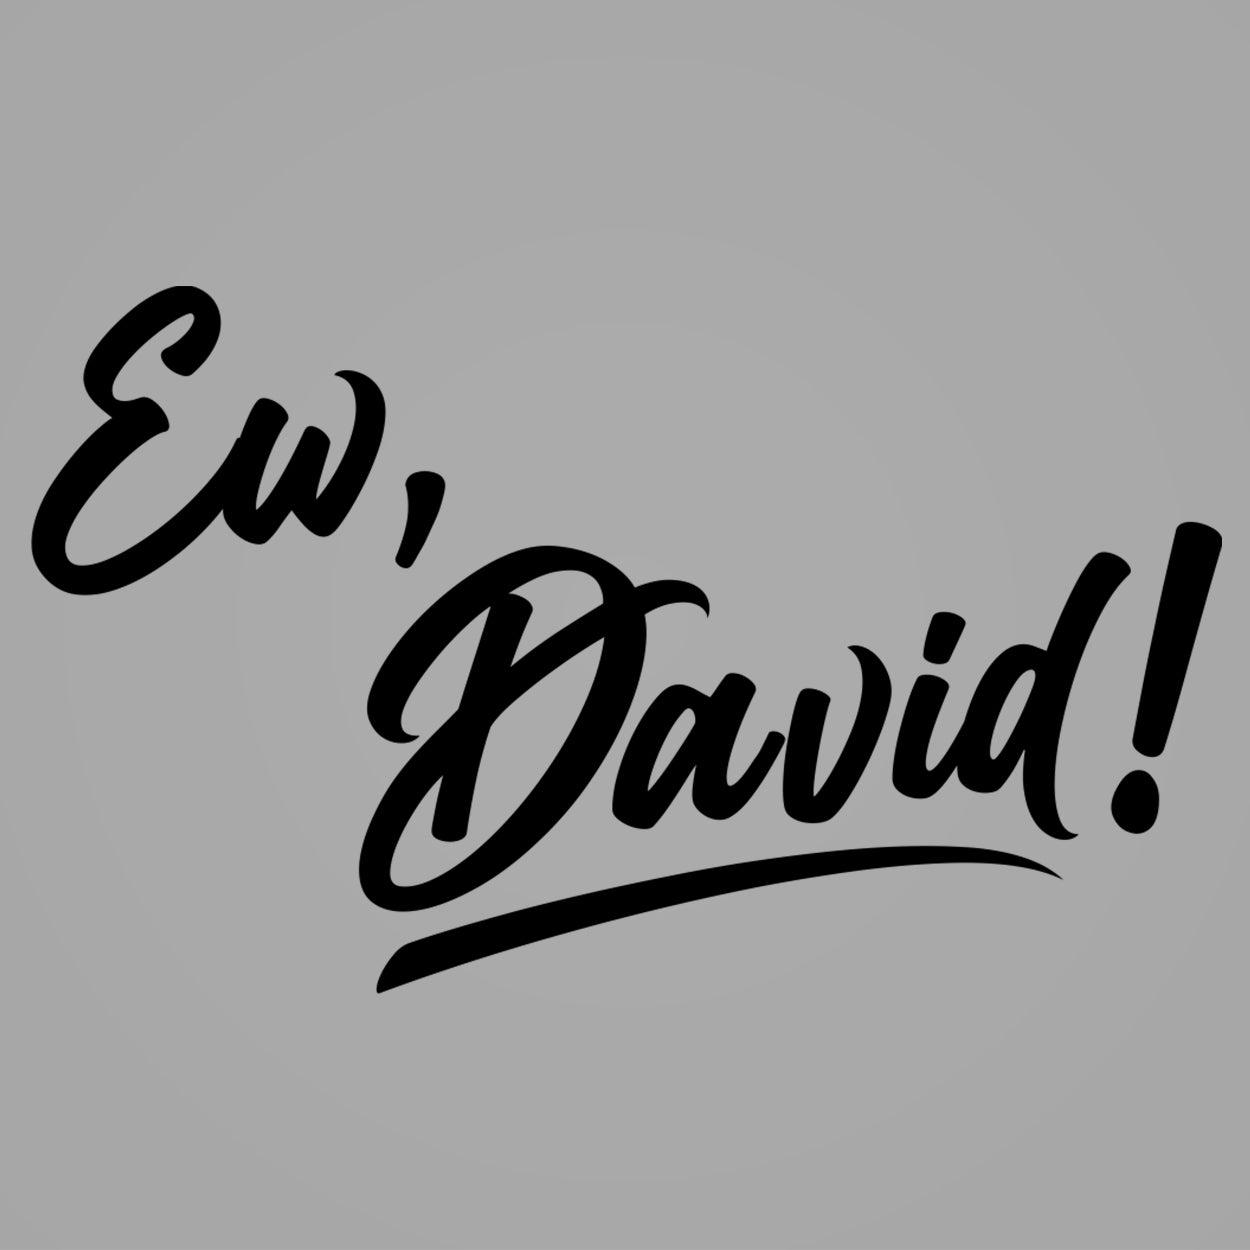 Ew, David!